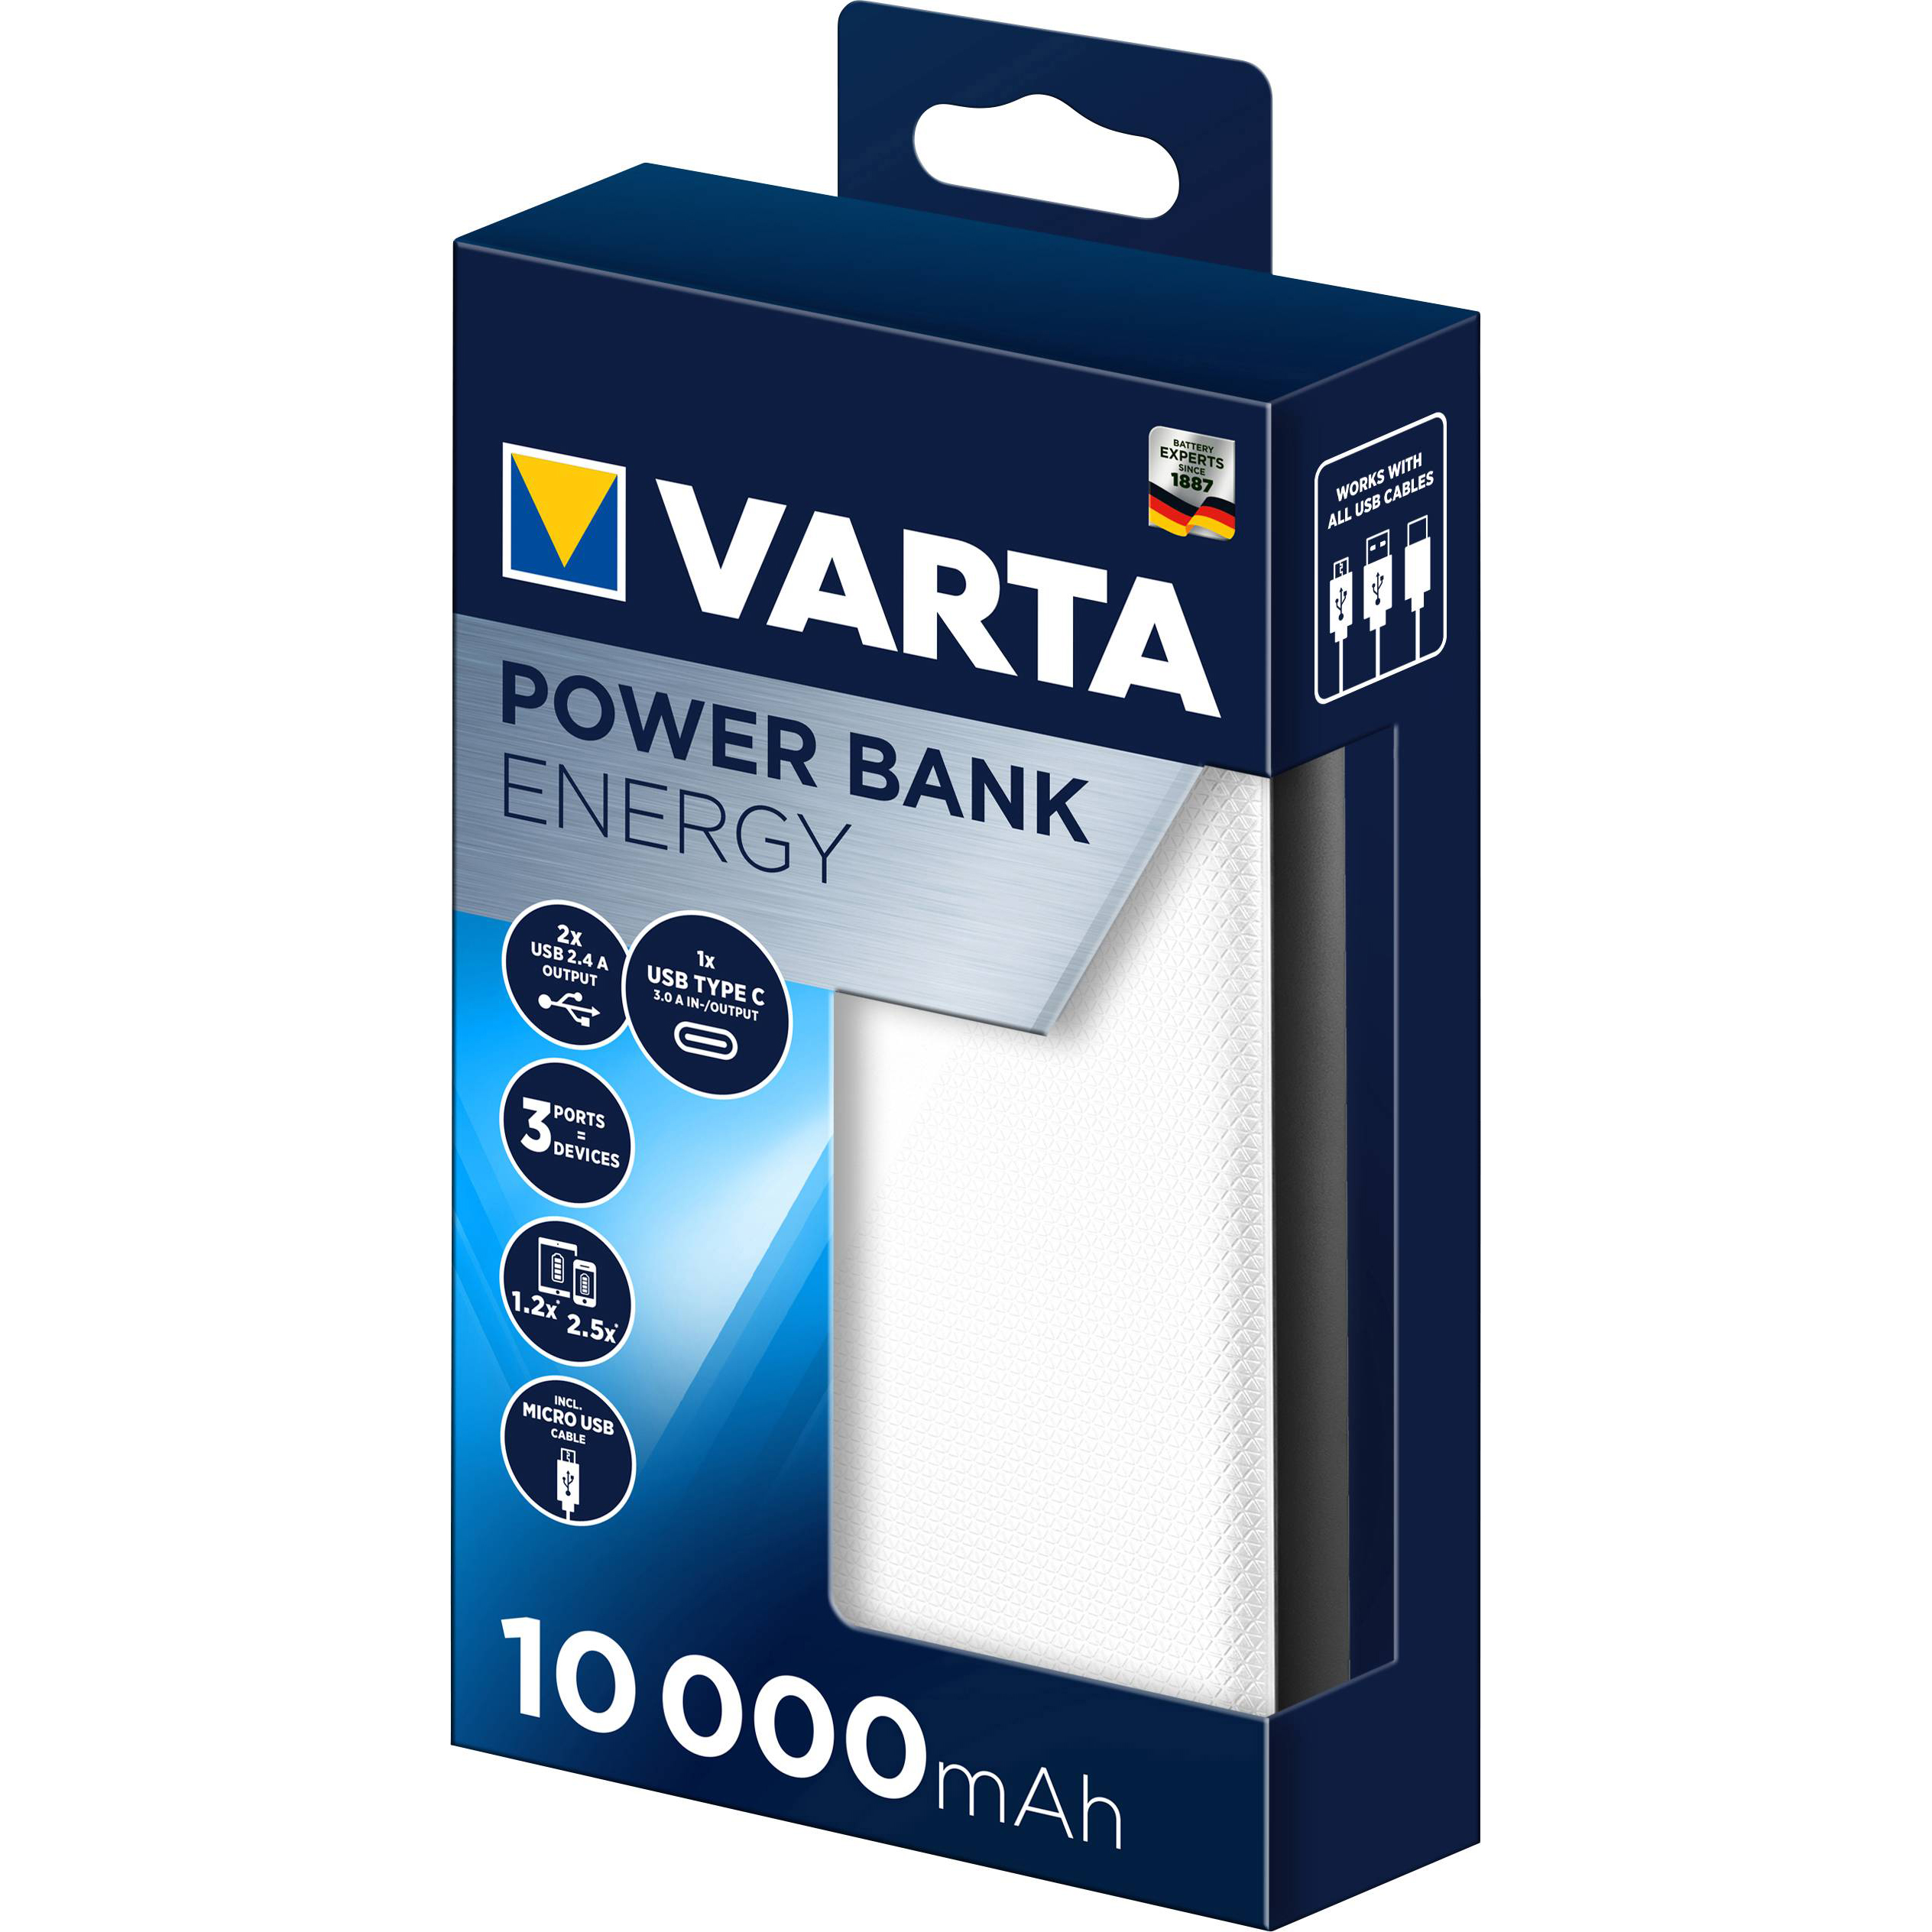 VARTA Power Bank Energy 10000mAh fehér